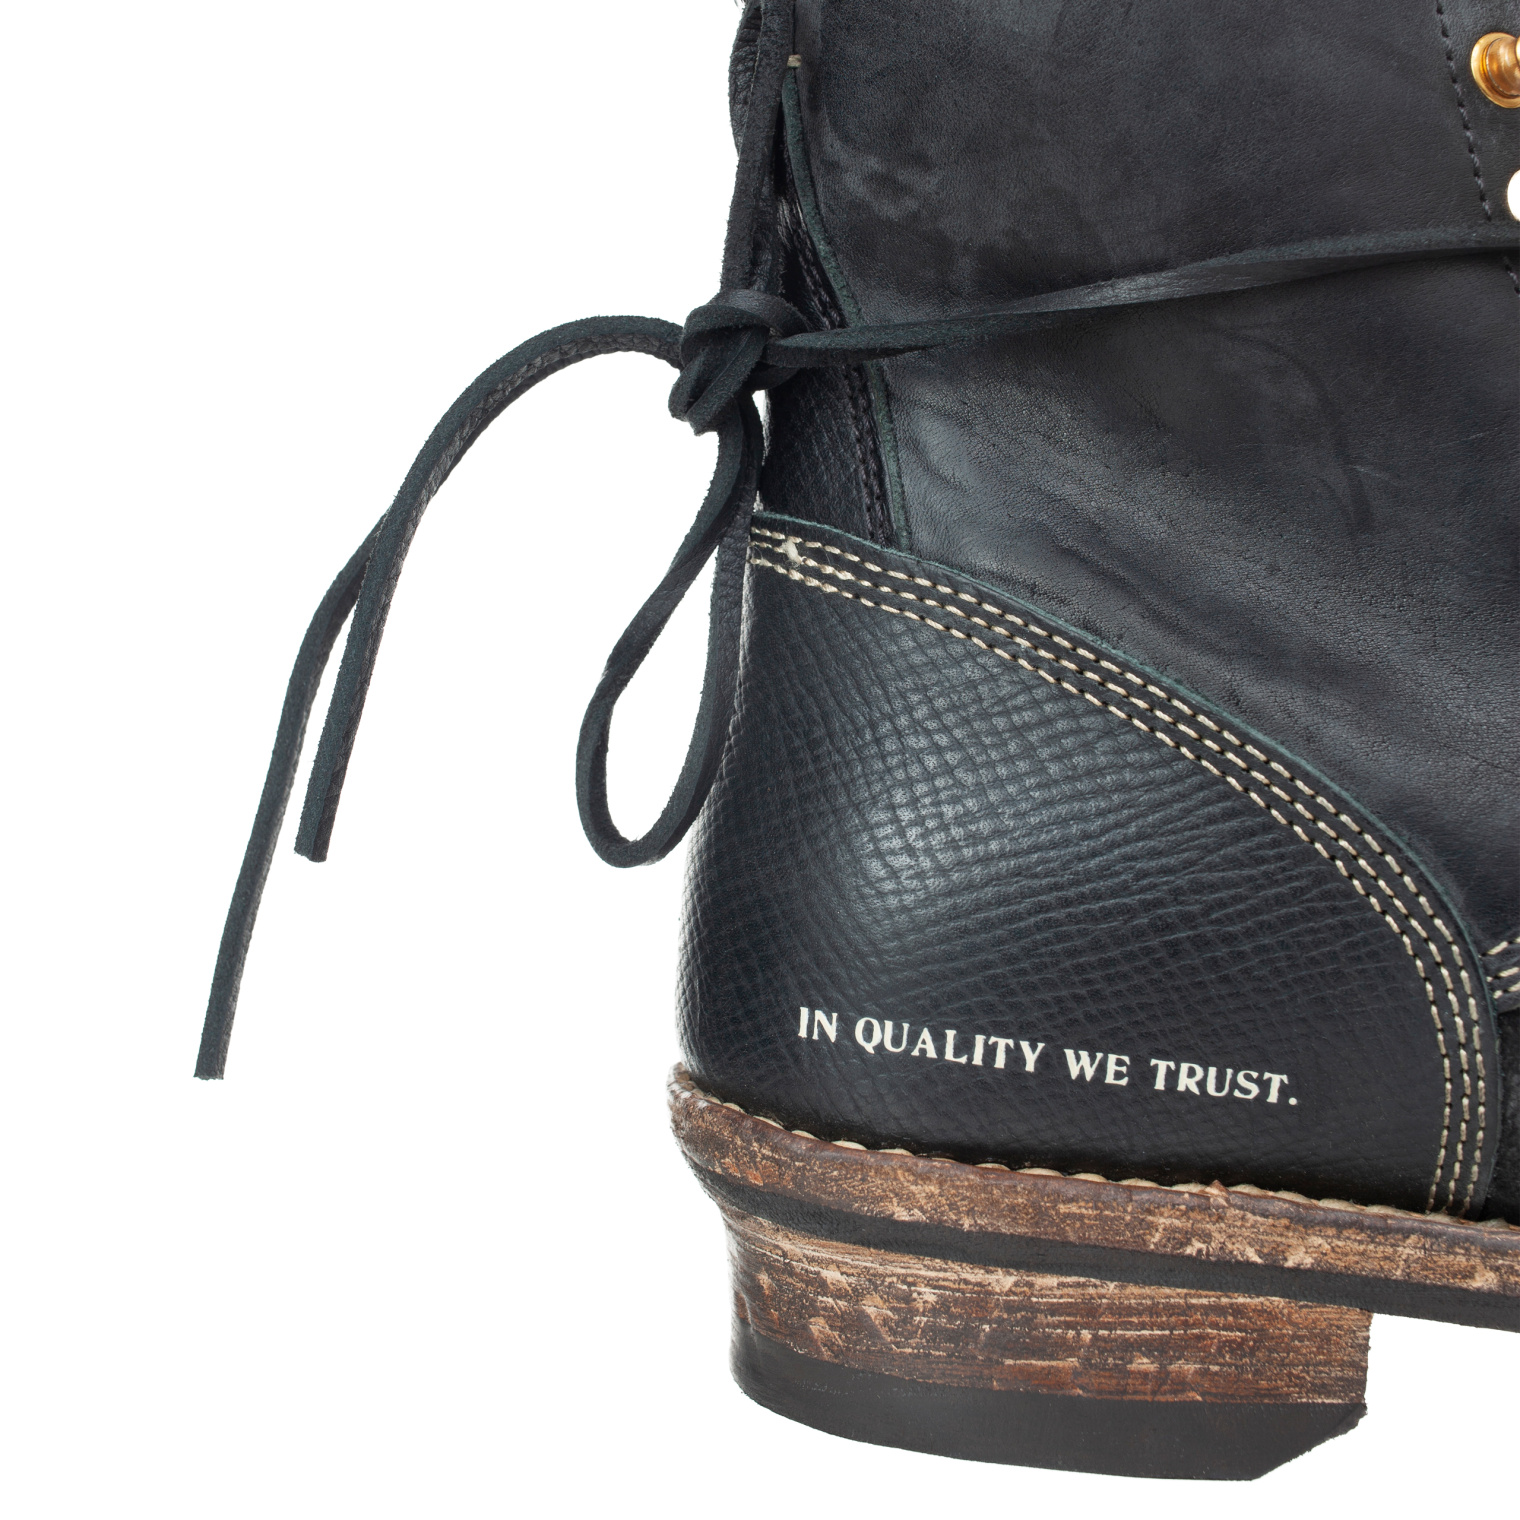 visvim Poundmaker-folk leather boots